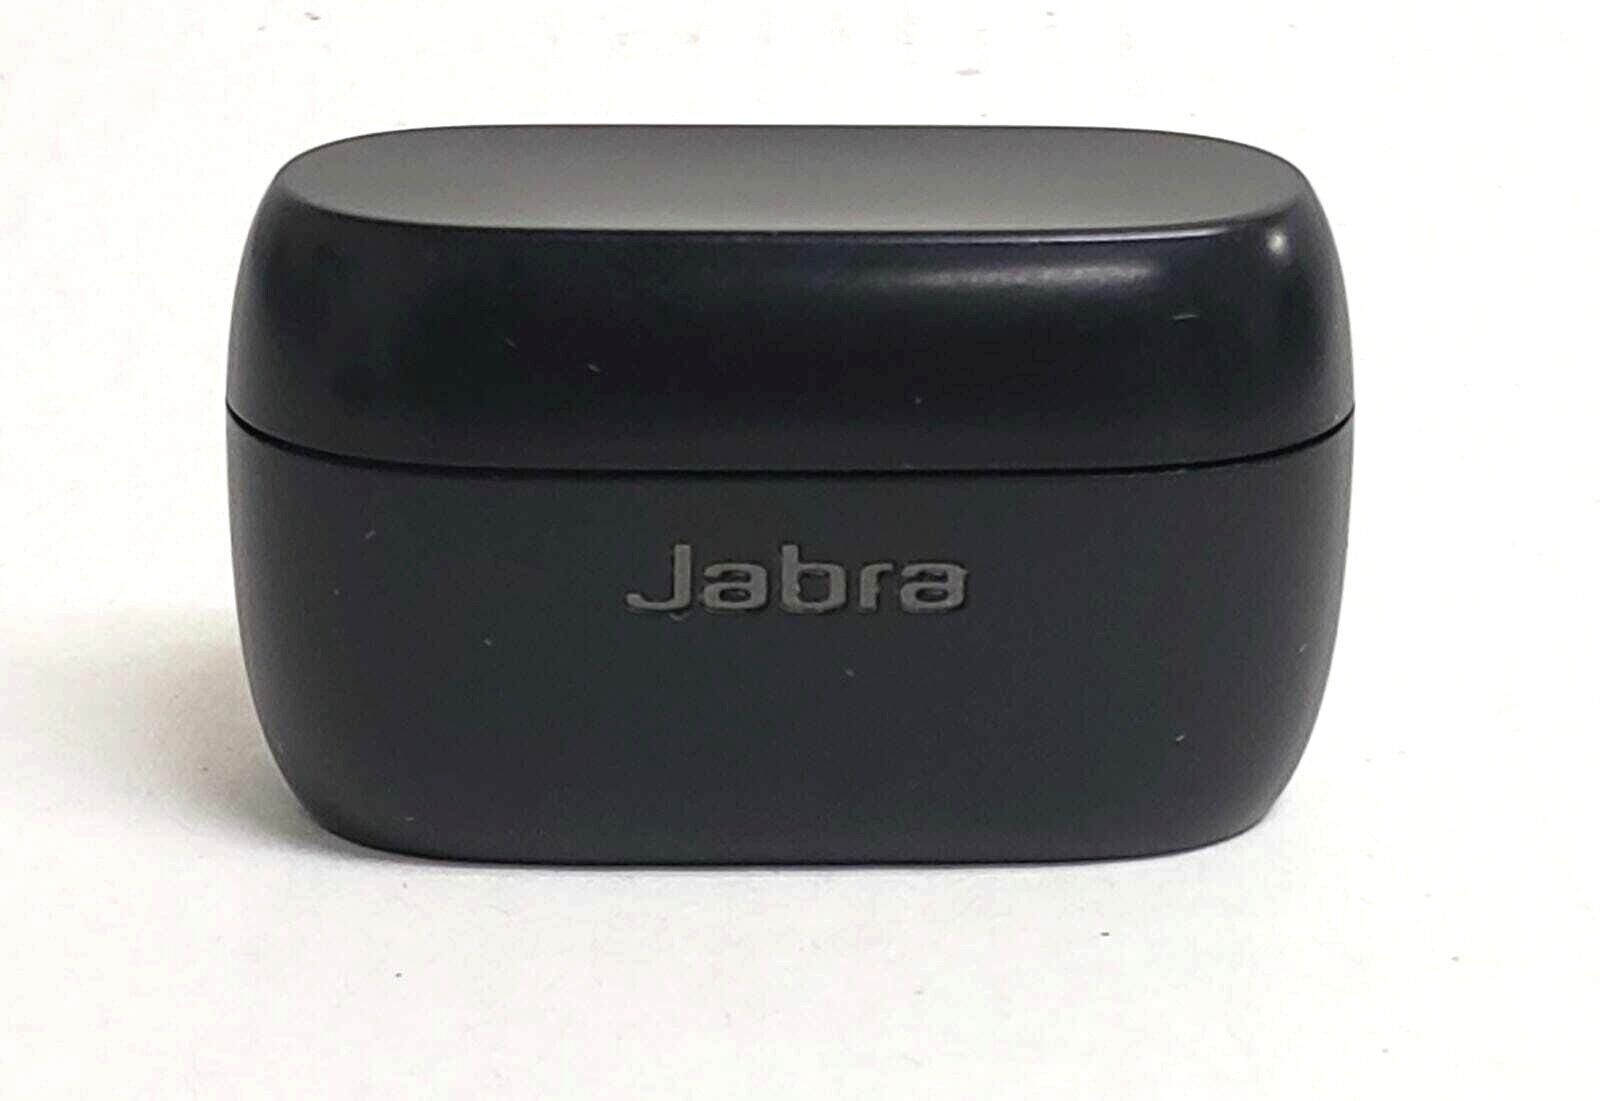 Jabra Elite 75t True Wireless In-Ear Headphones - Titanium Black *VERY GOOD* - $48.33